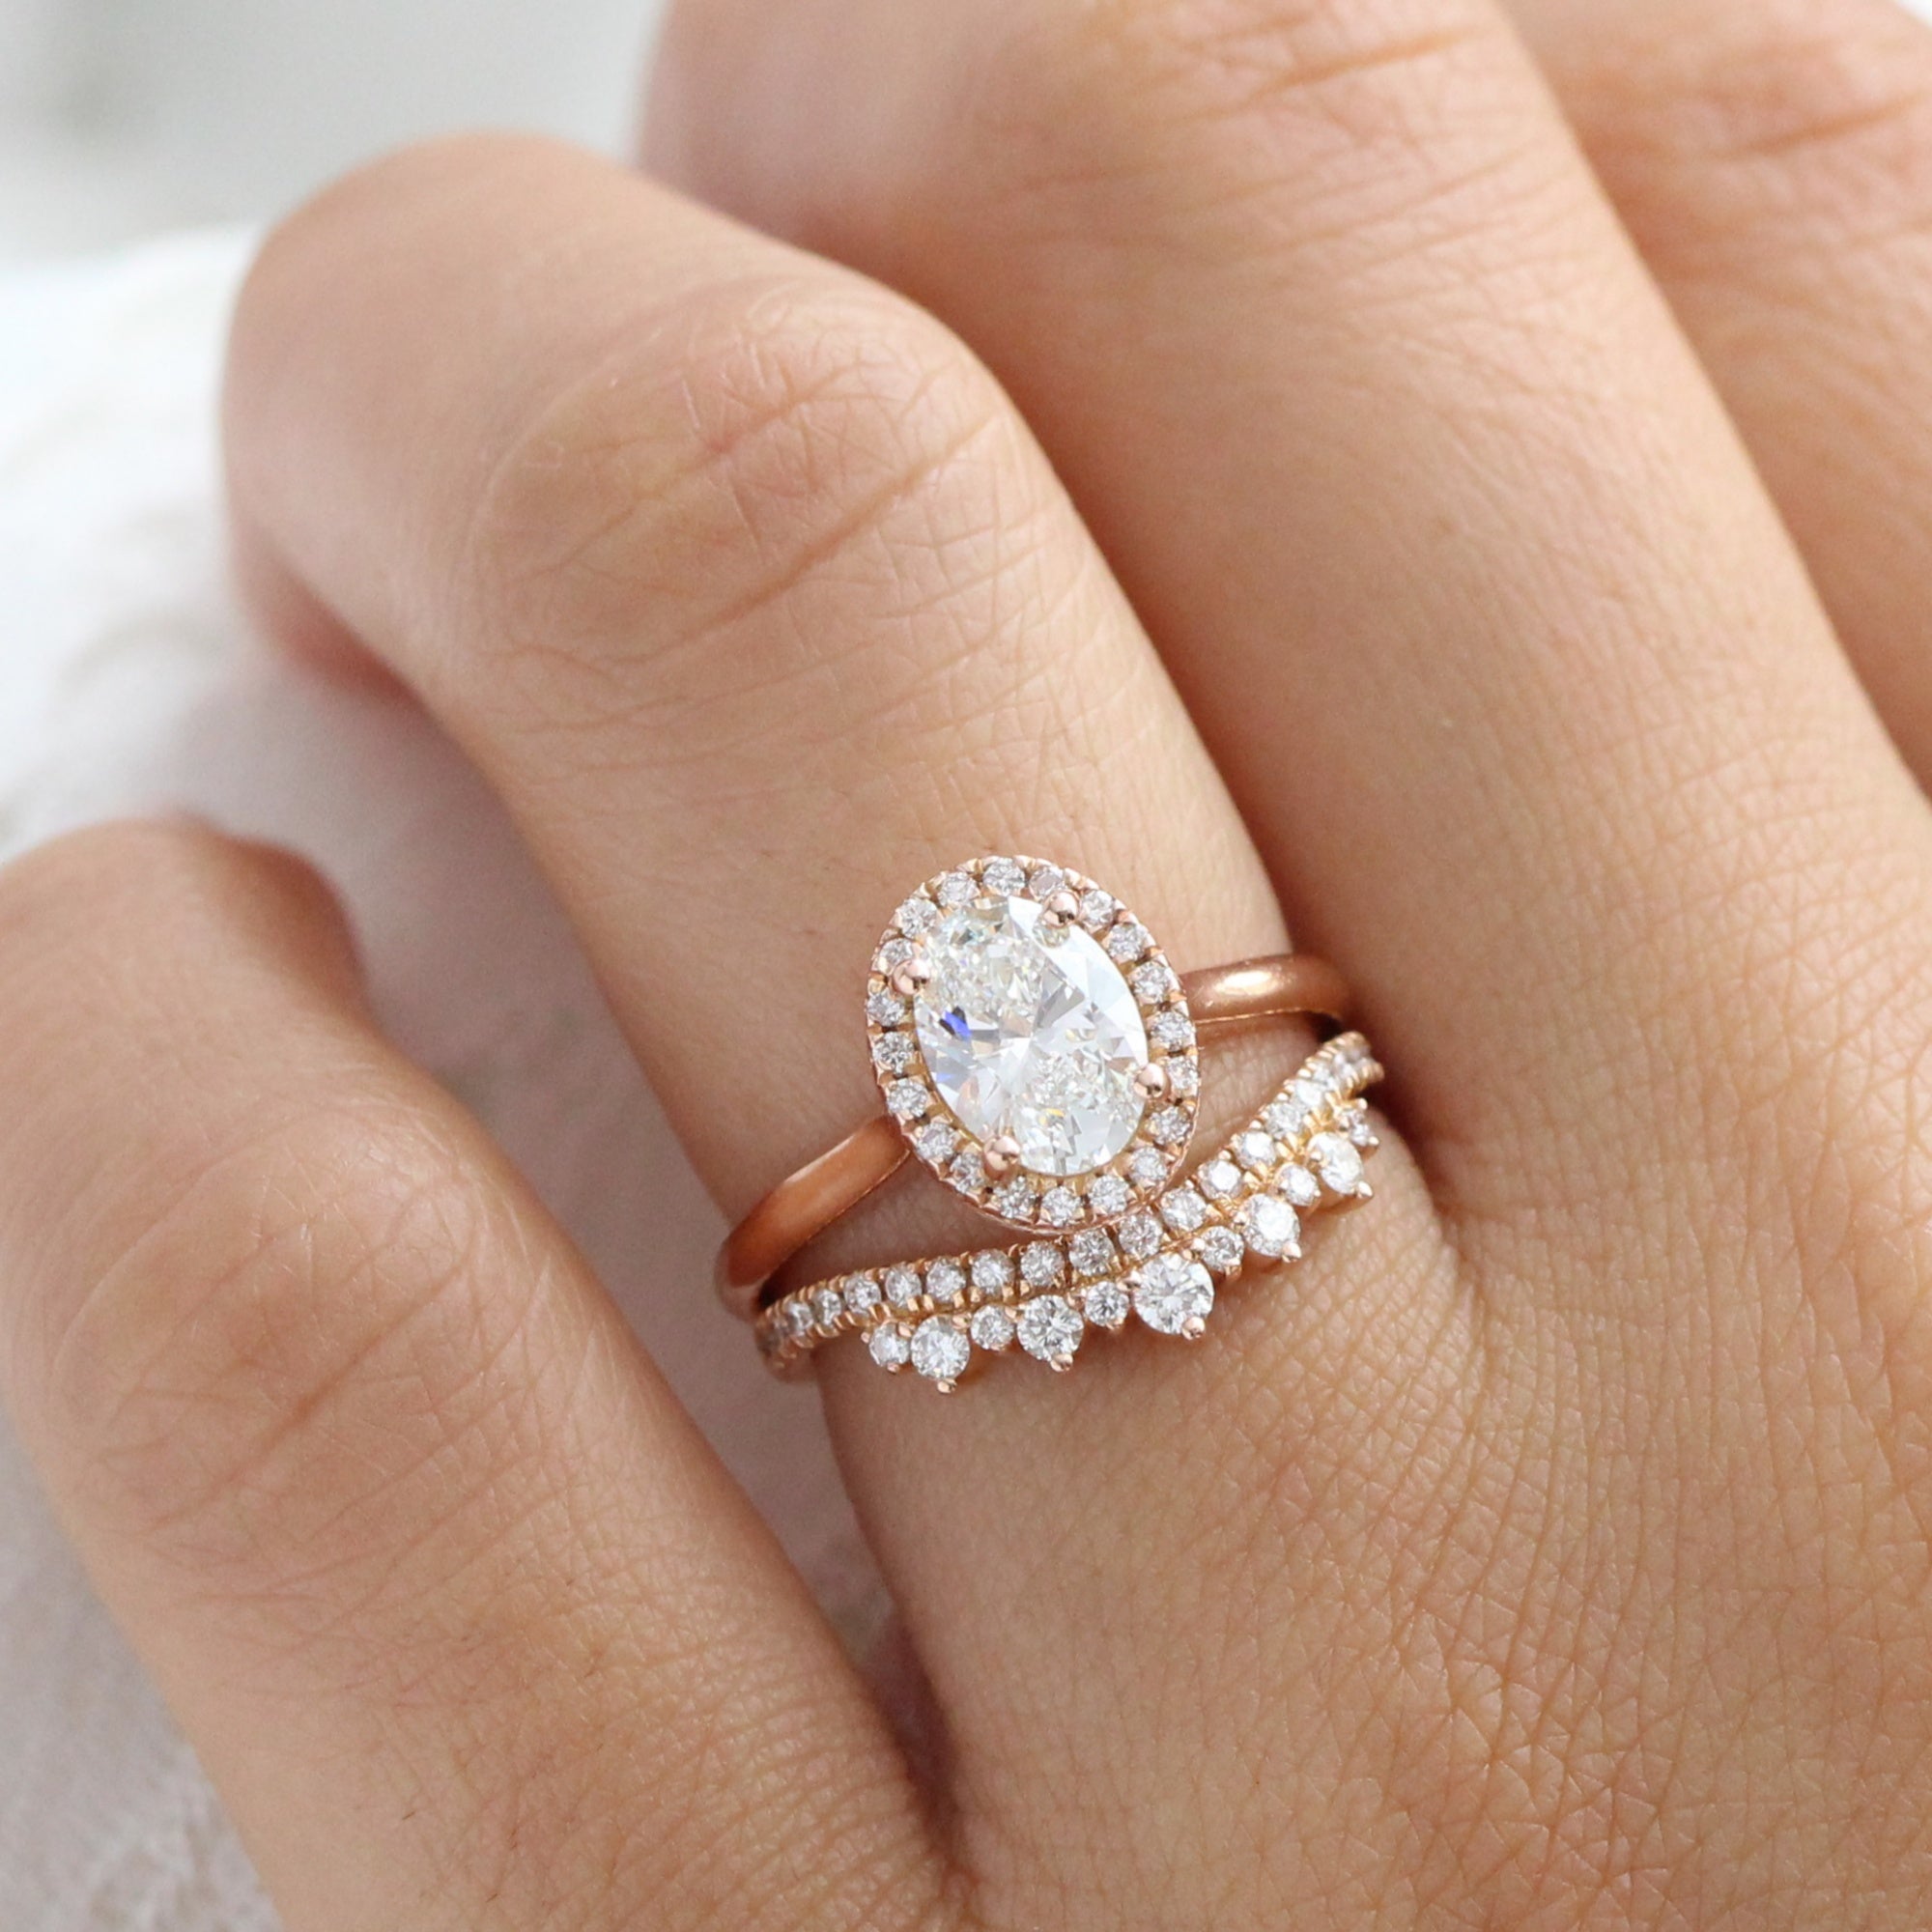 Daisy Round Halo Engagement Ring Vintage Inspired style bridal set